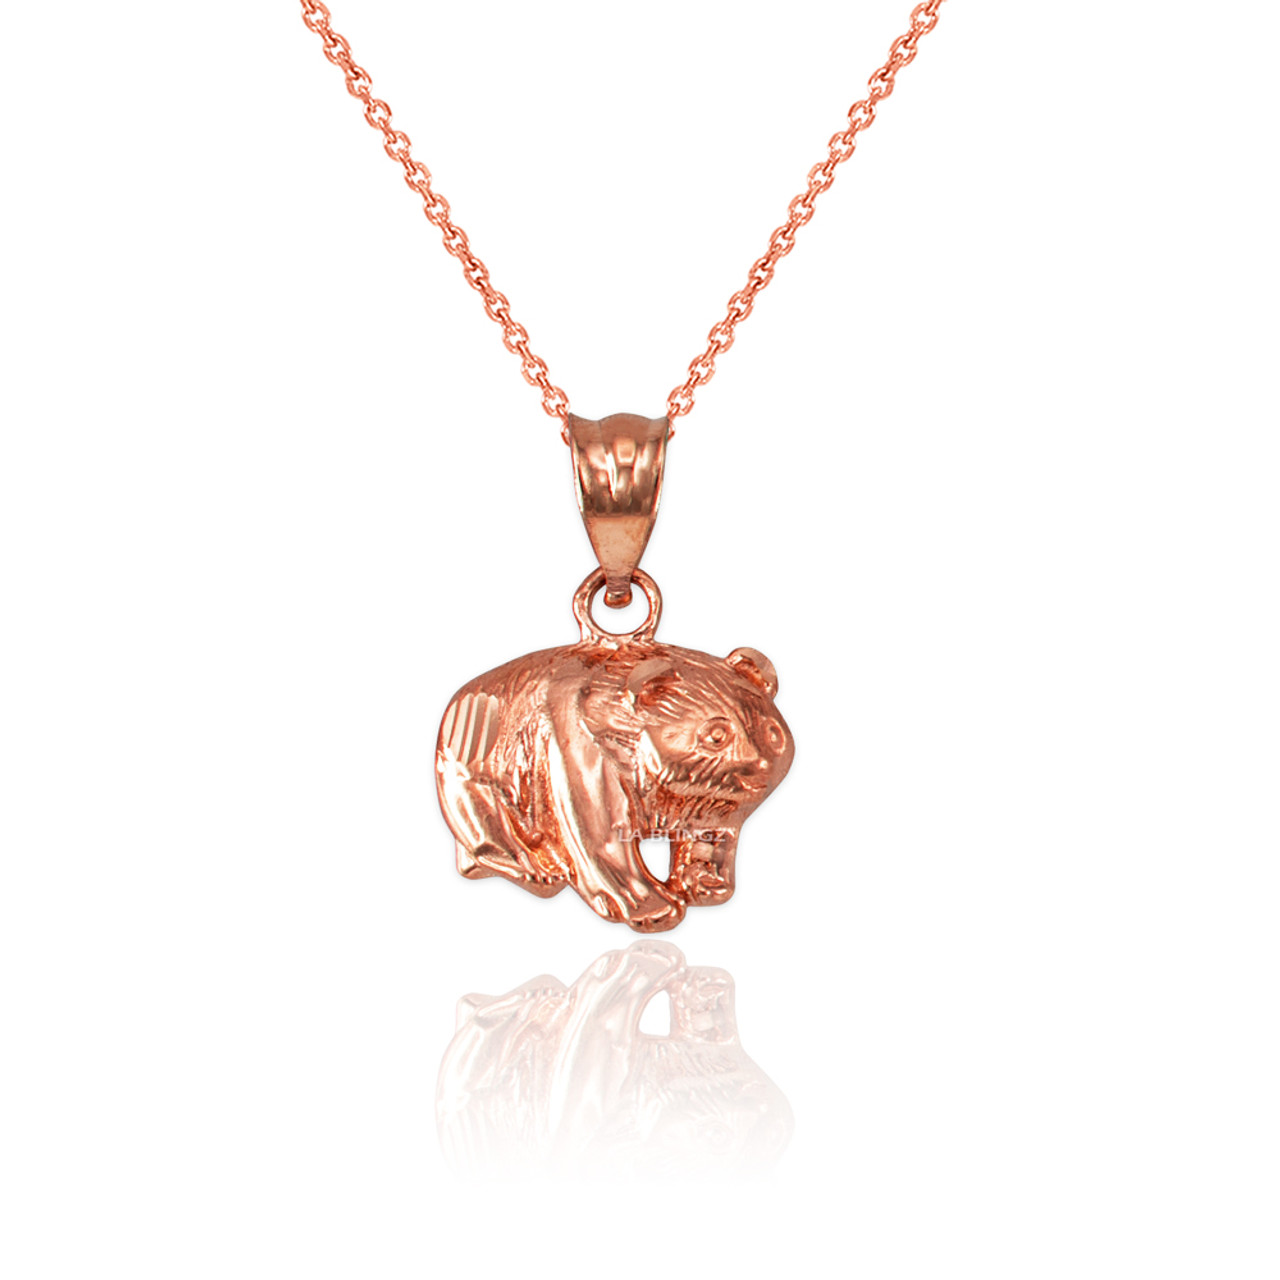 Moose & Bear Charm necklace